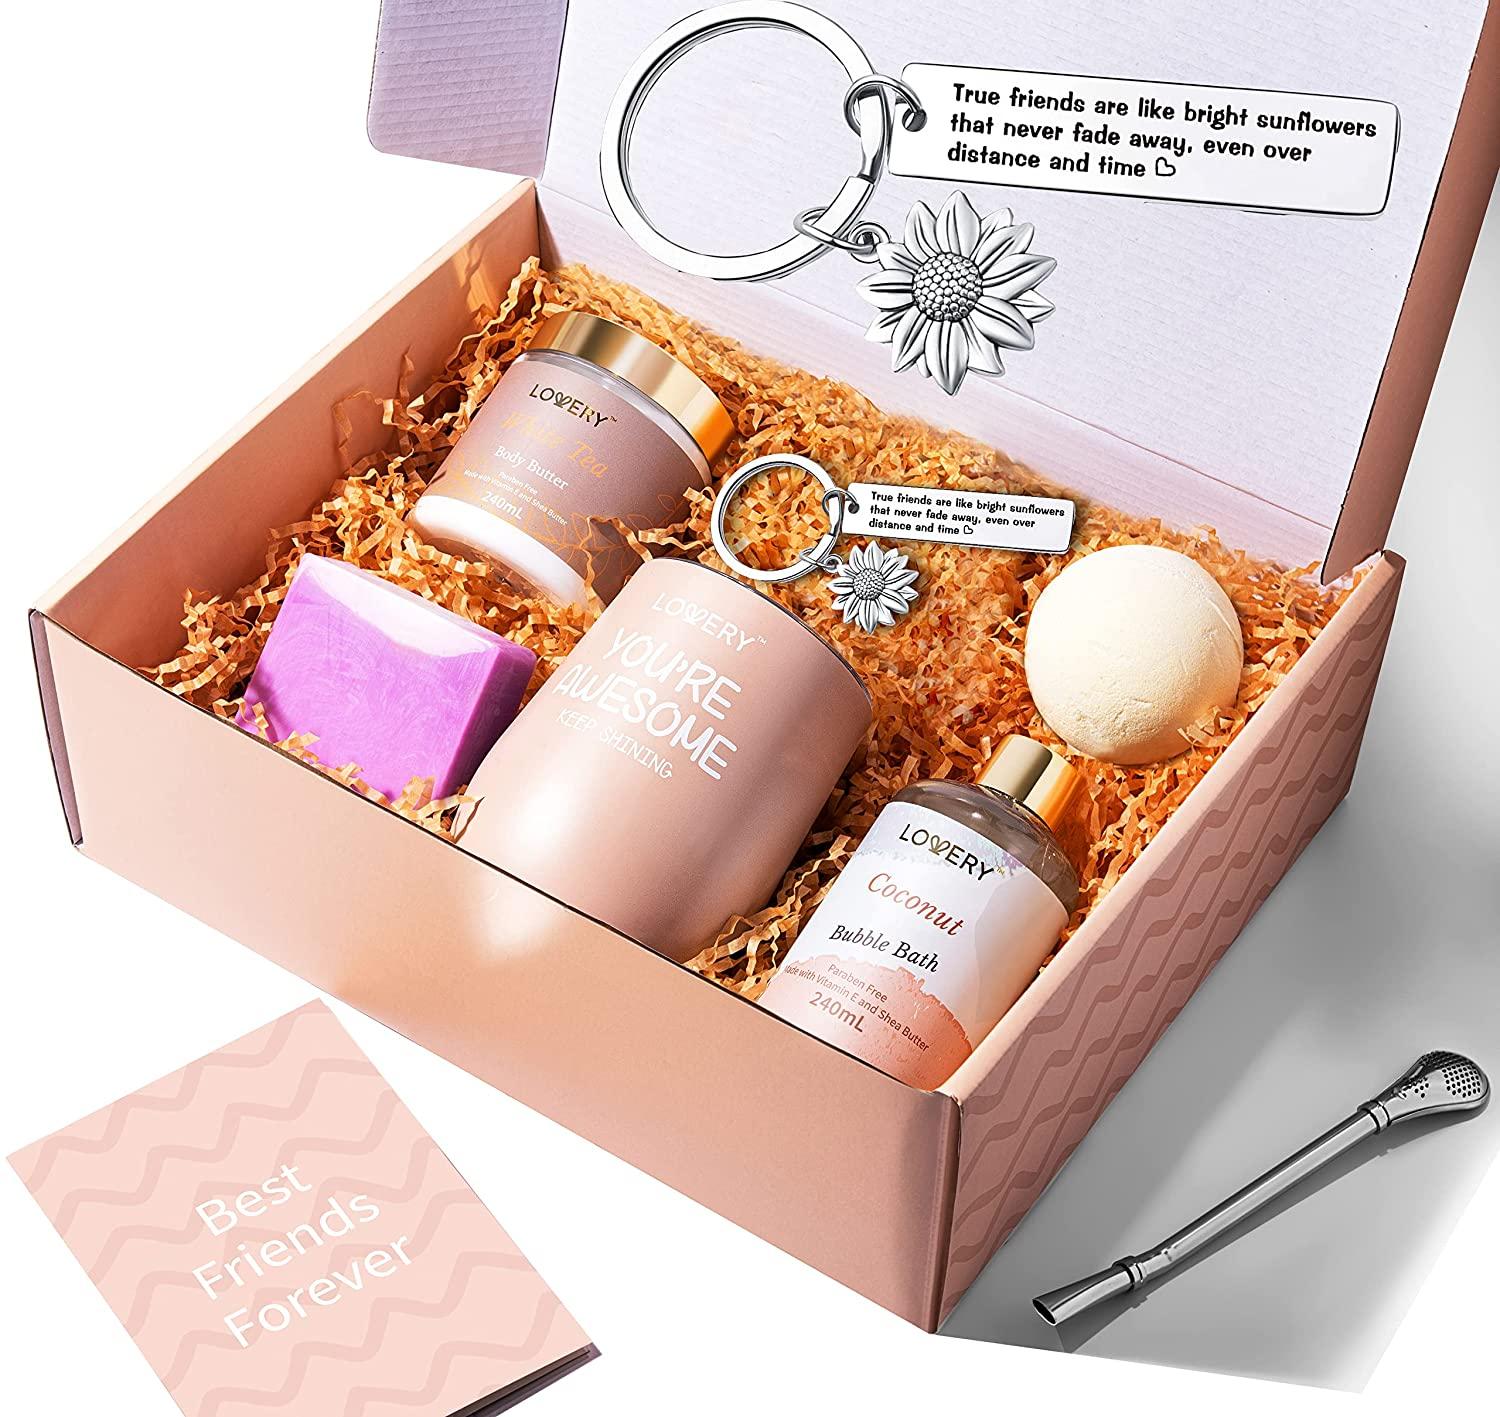 Care Package - EASY DIY Care Package Ideas - Homemade Gift Box Presents -  Boyfriend - Girlfriend- Best Friends - Creative -